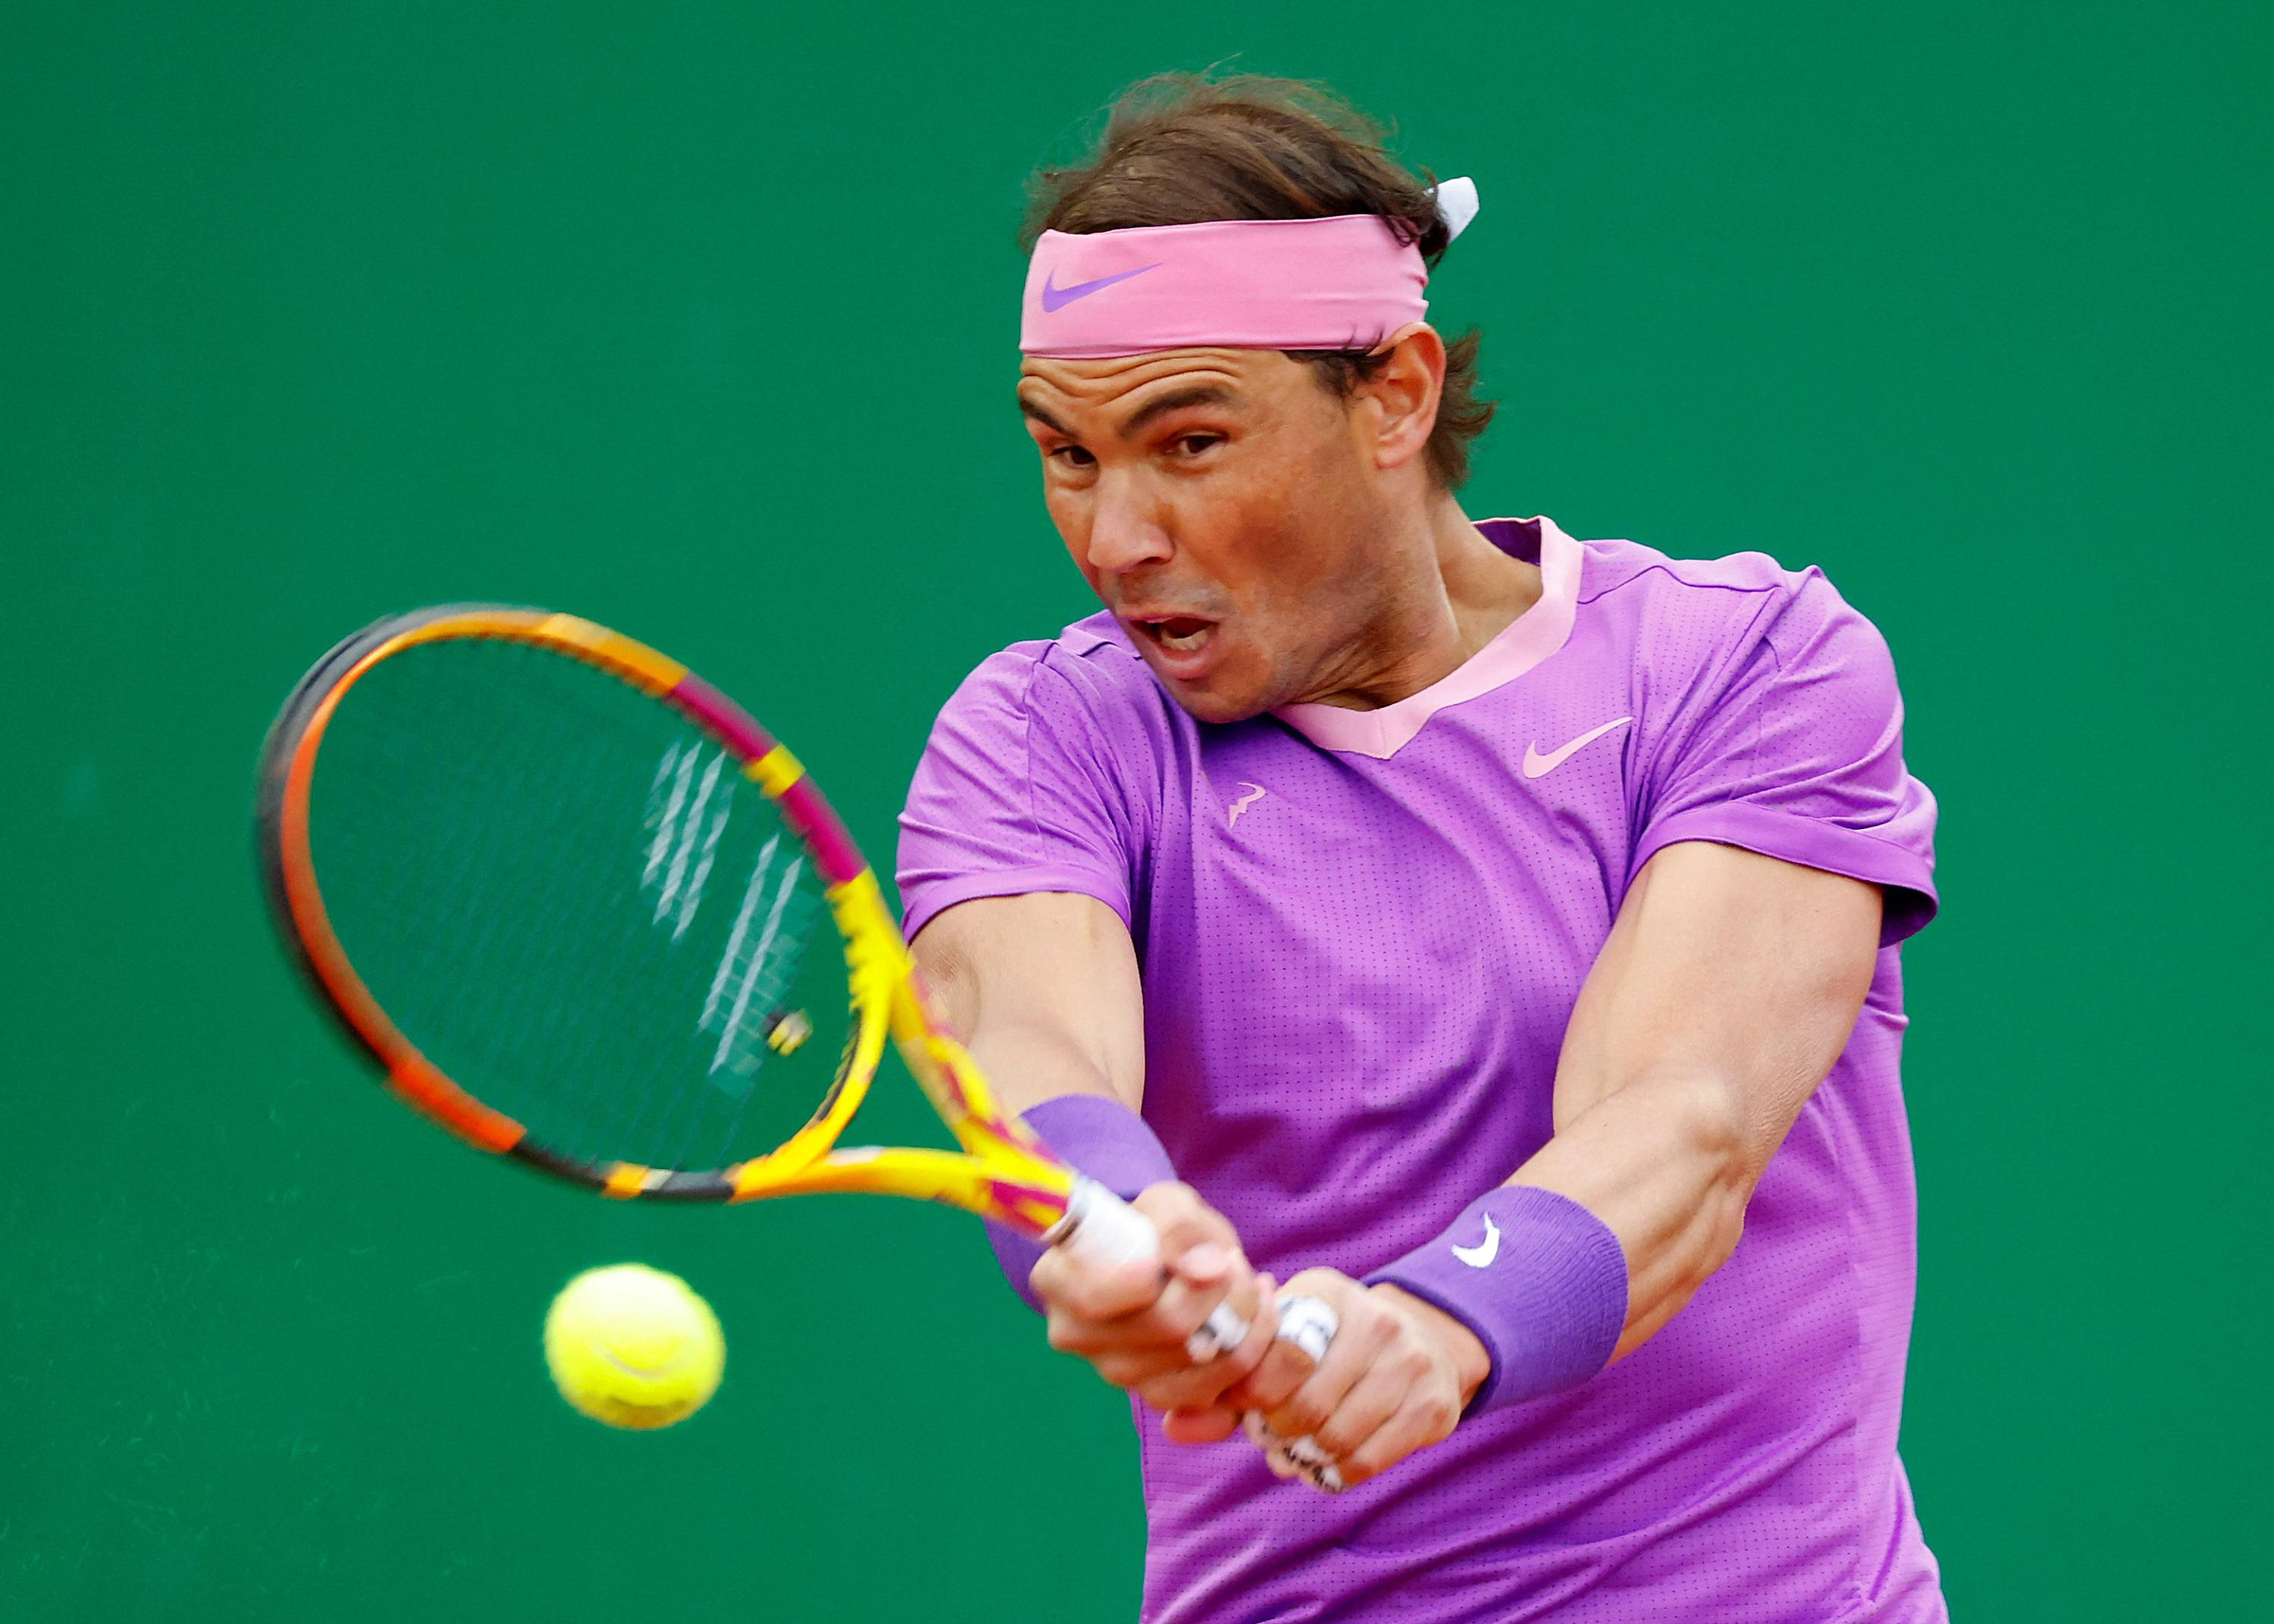 Tennis: Rafael Nadal will make his return to clay in Barcelona against Cobolli